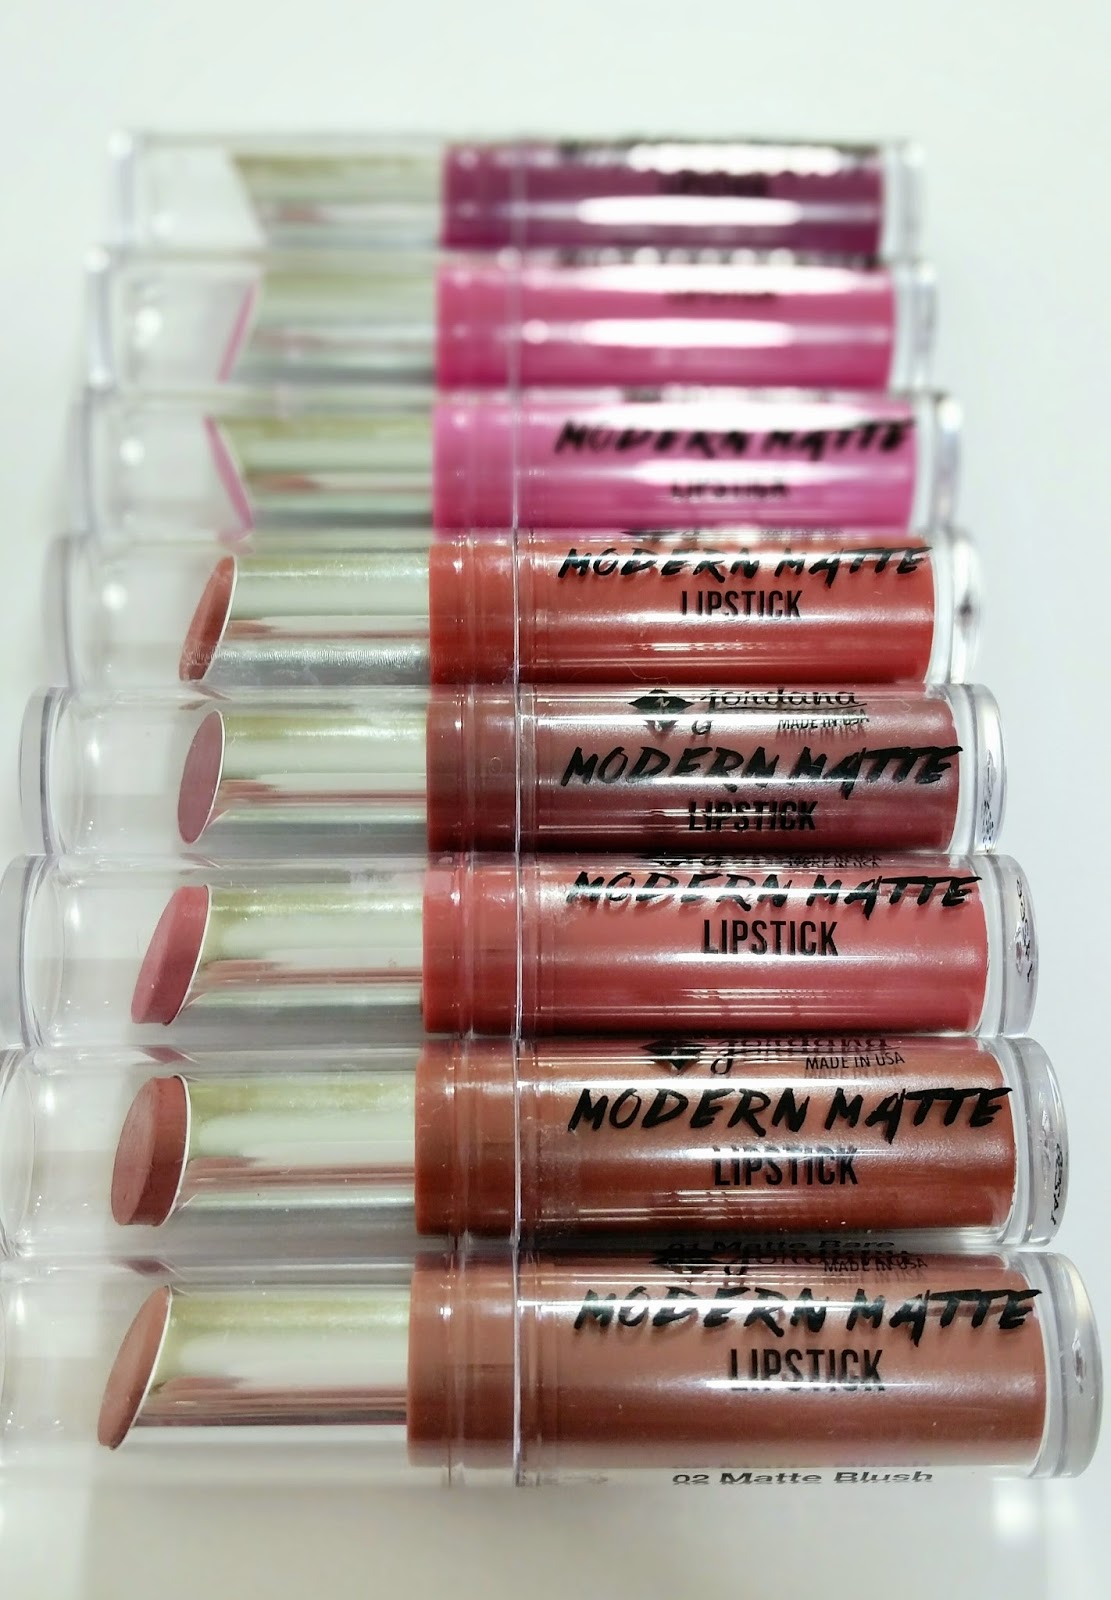 Jordana Modern Matte Lipstick Review and Swatches | The Budget Beauty Blog